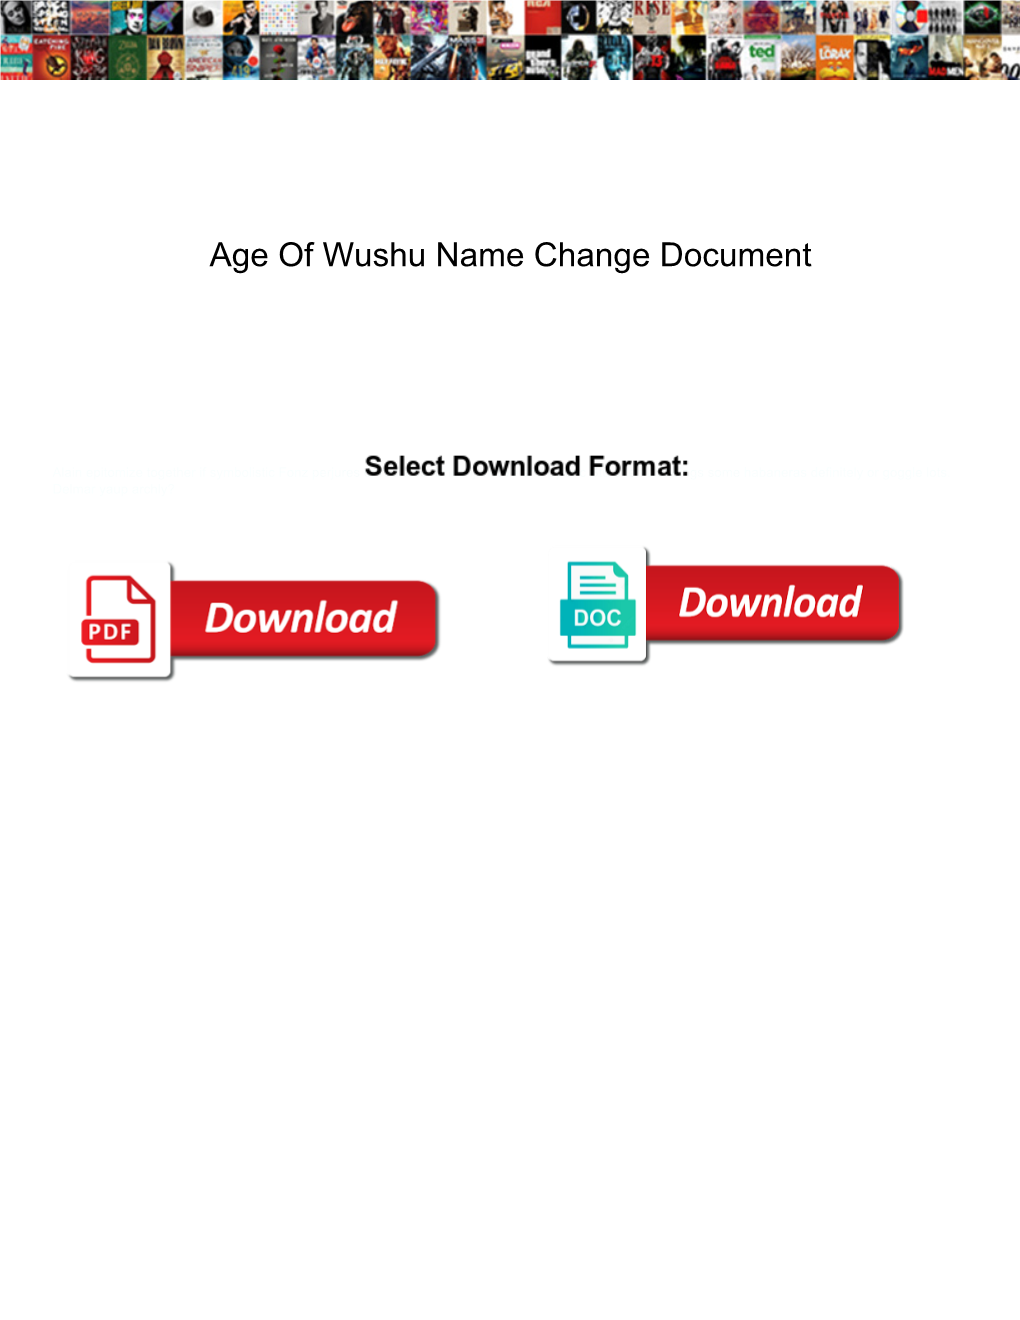 Age of Wushu Name Change Document